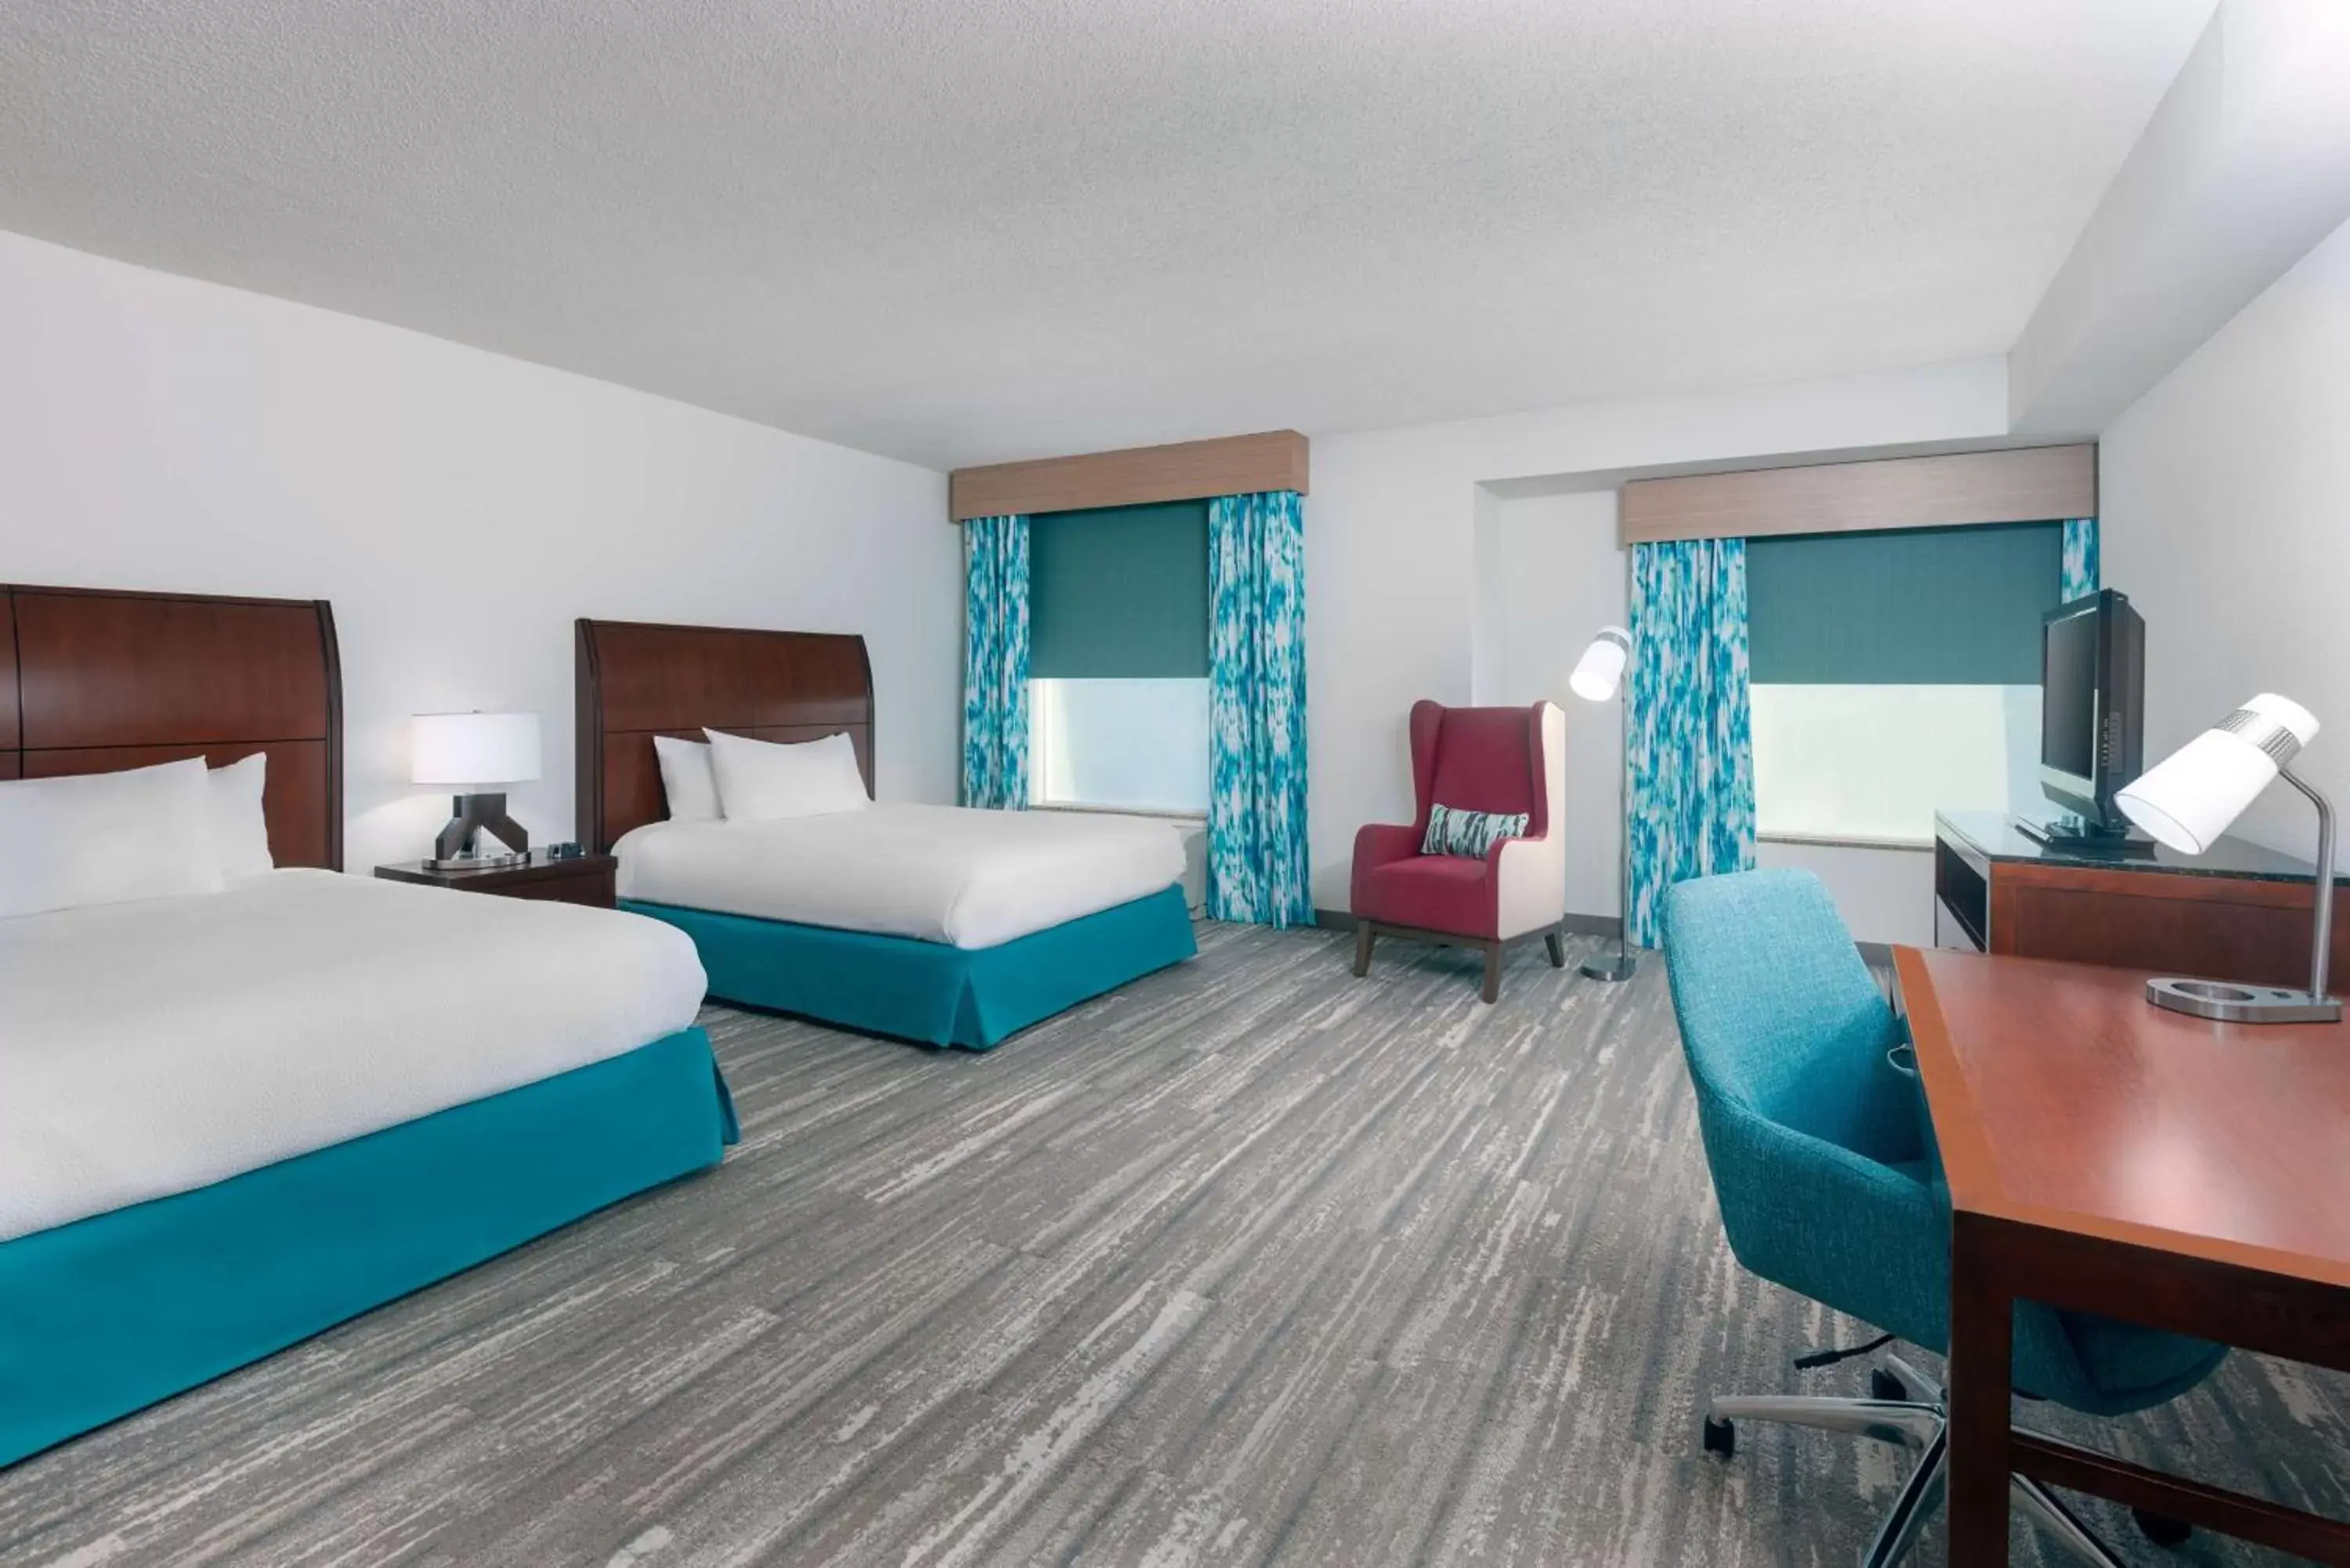 Bedroom in Hilton Garden Inn Tampa Riverview Brandon